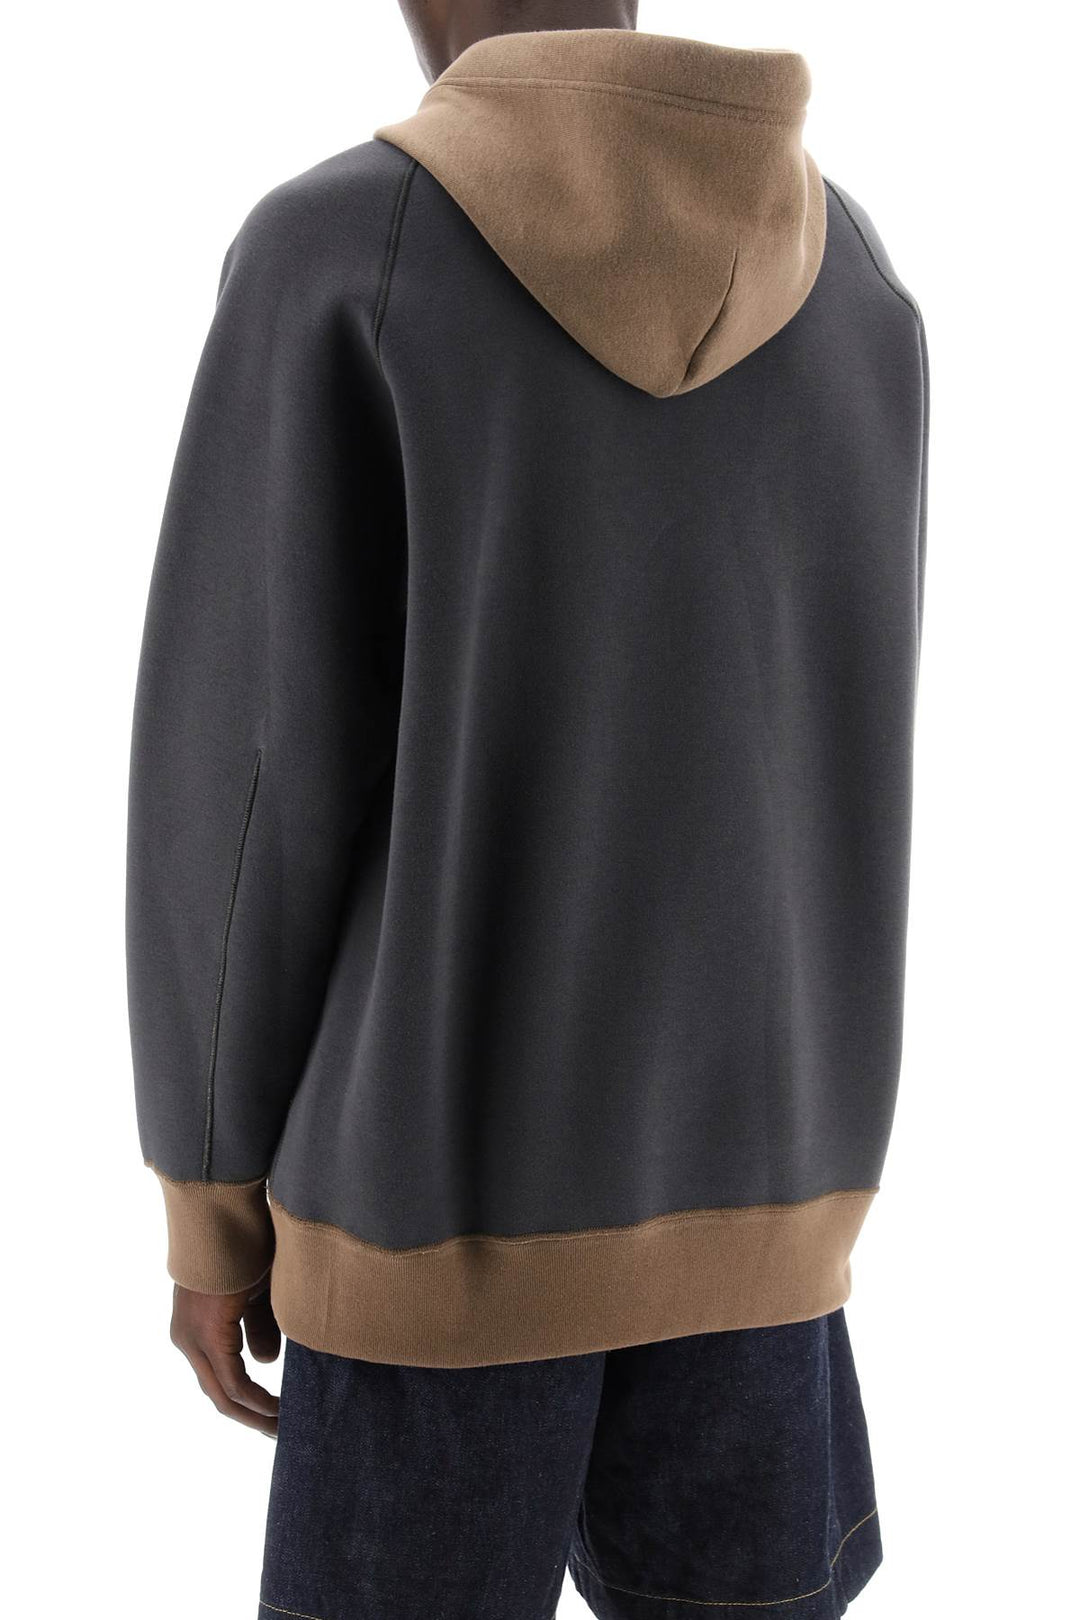 Sacai Hooded Sweatshirt With Reverse   Grey